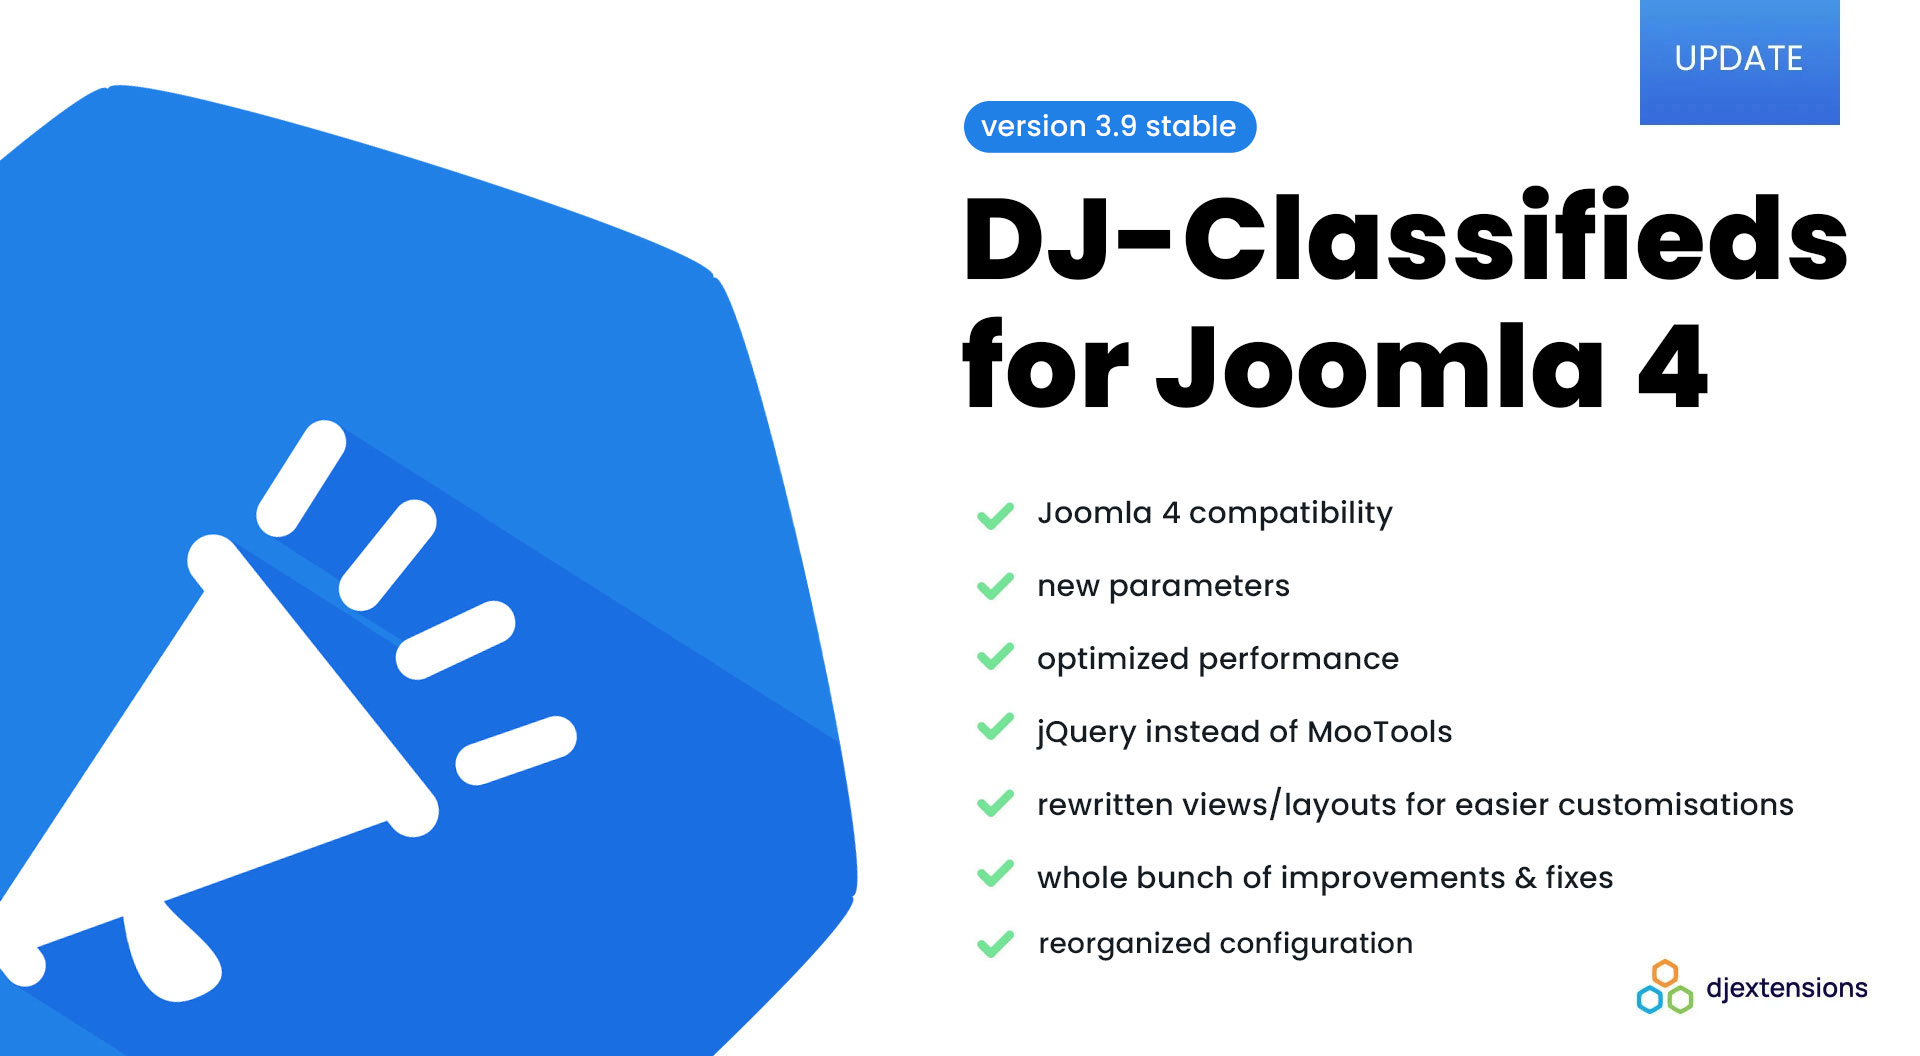 DJ-Classifieds for Joomla 4